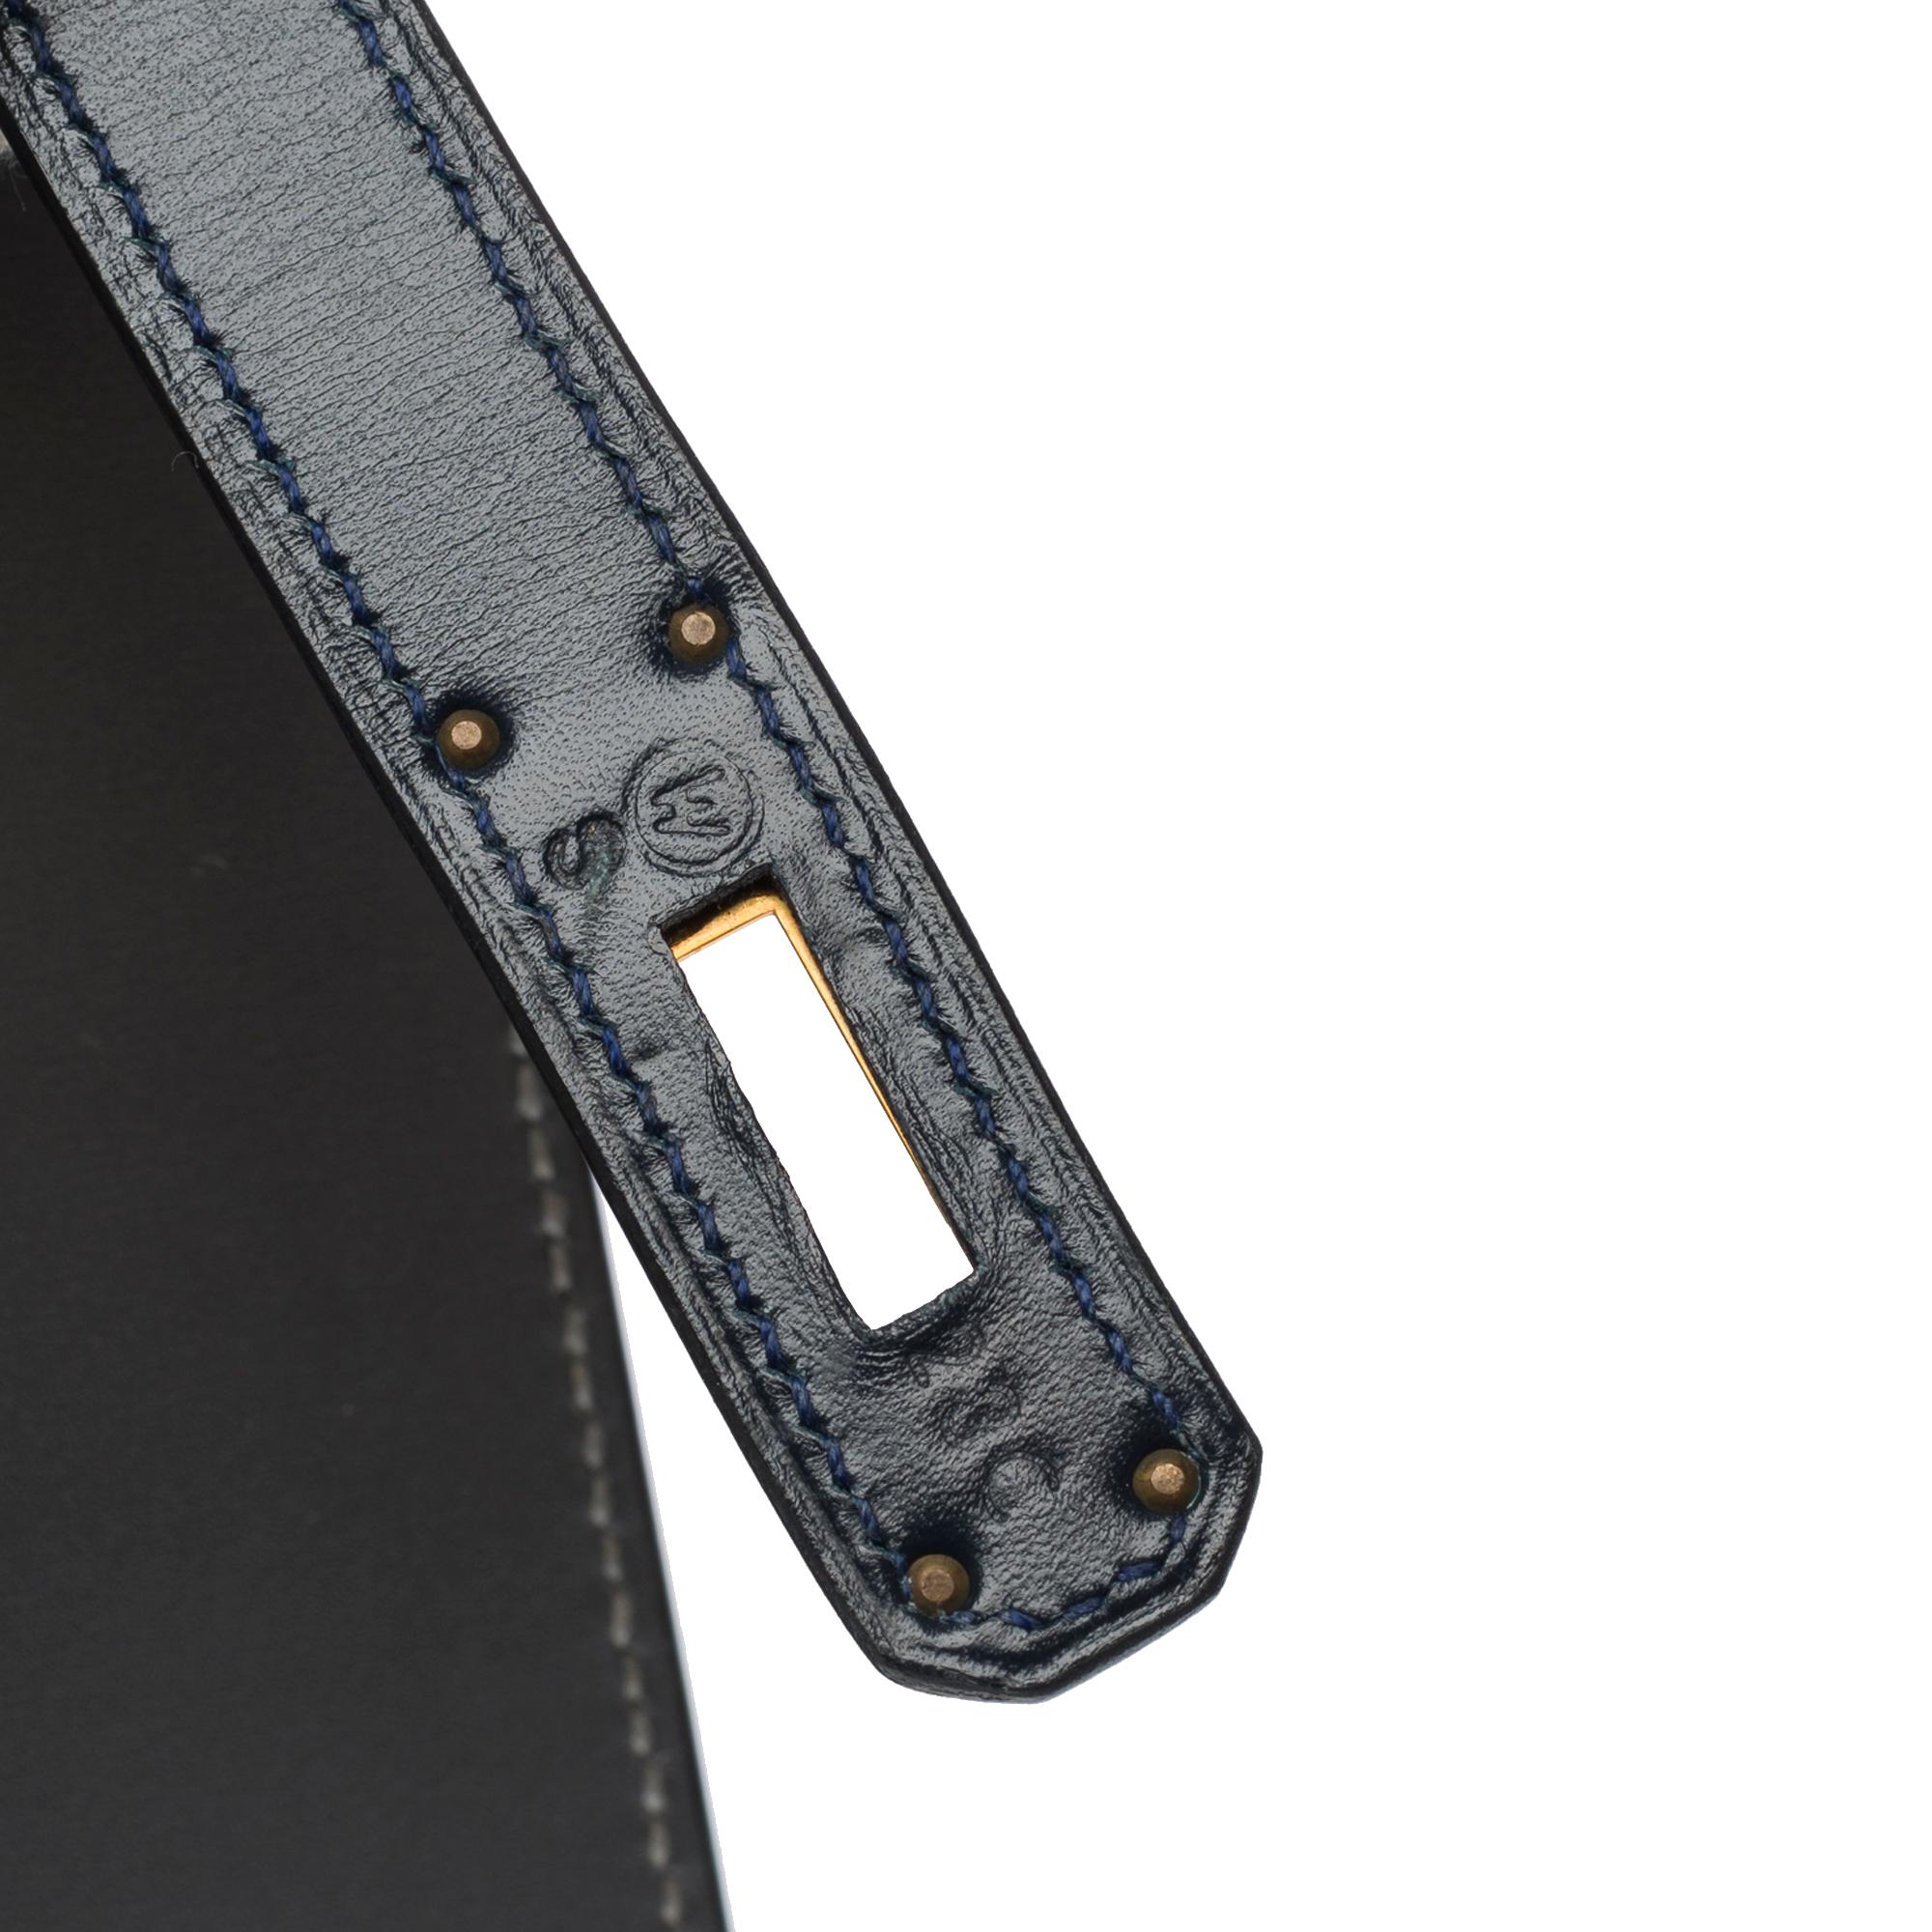 Rare Hermès Kelly 32 sellier handbag strap in Navy & Black calfskin leather, GHW 3